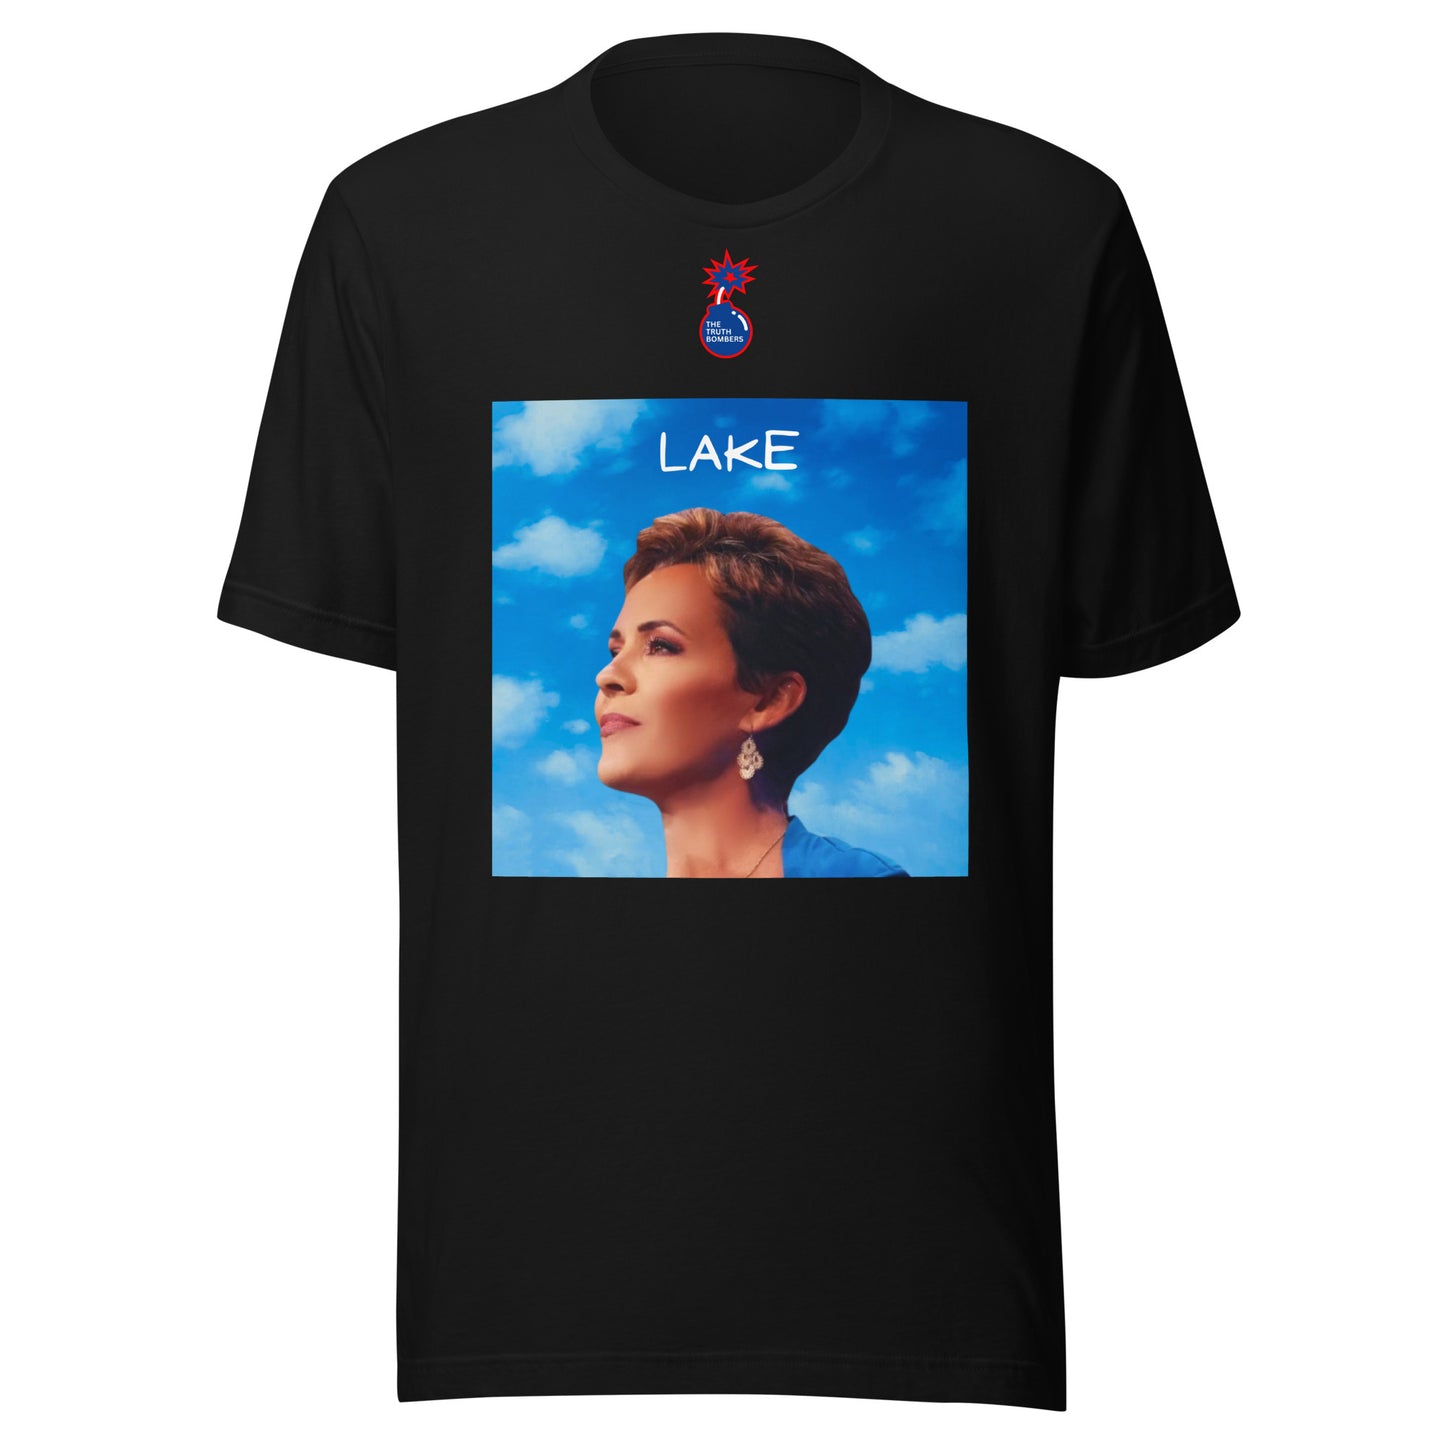 LAKE T-Shirt (Black)